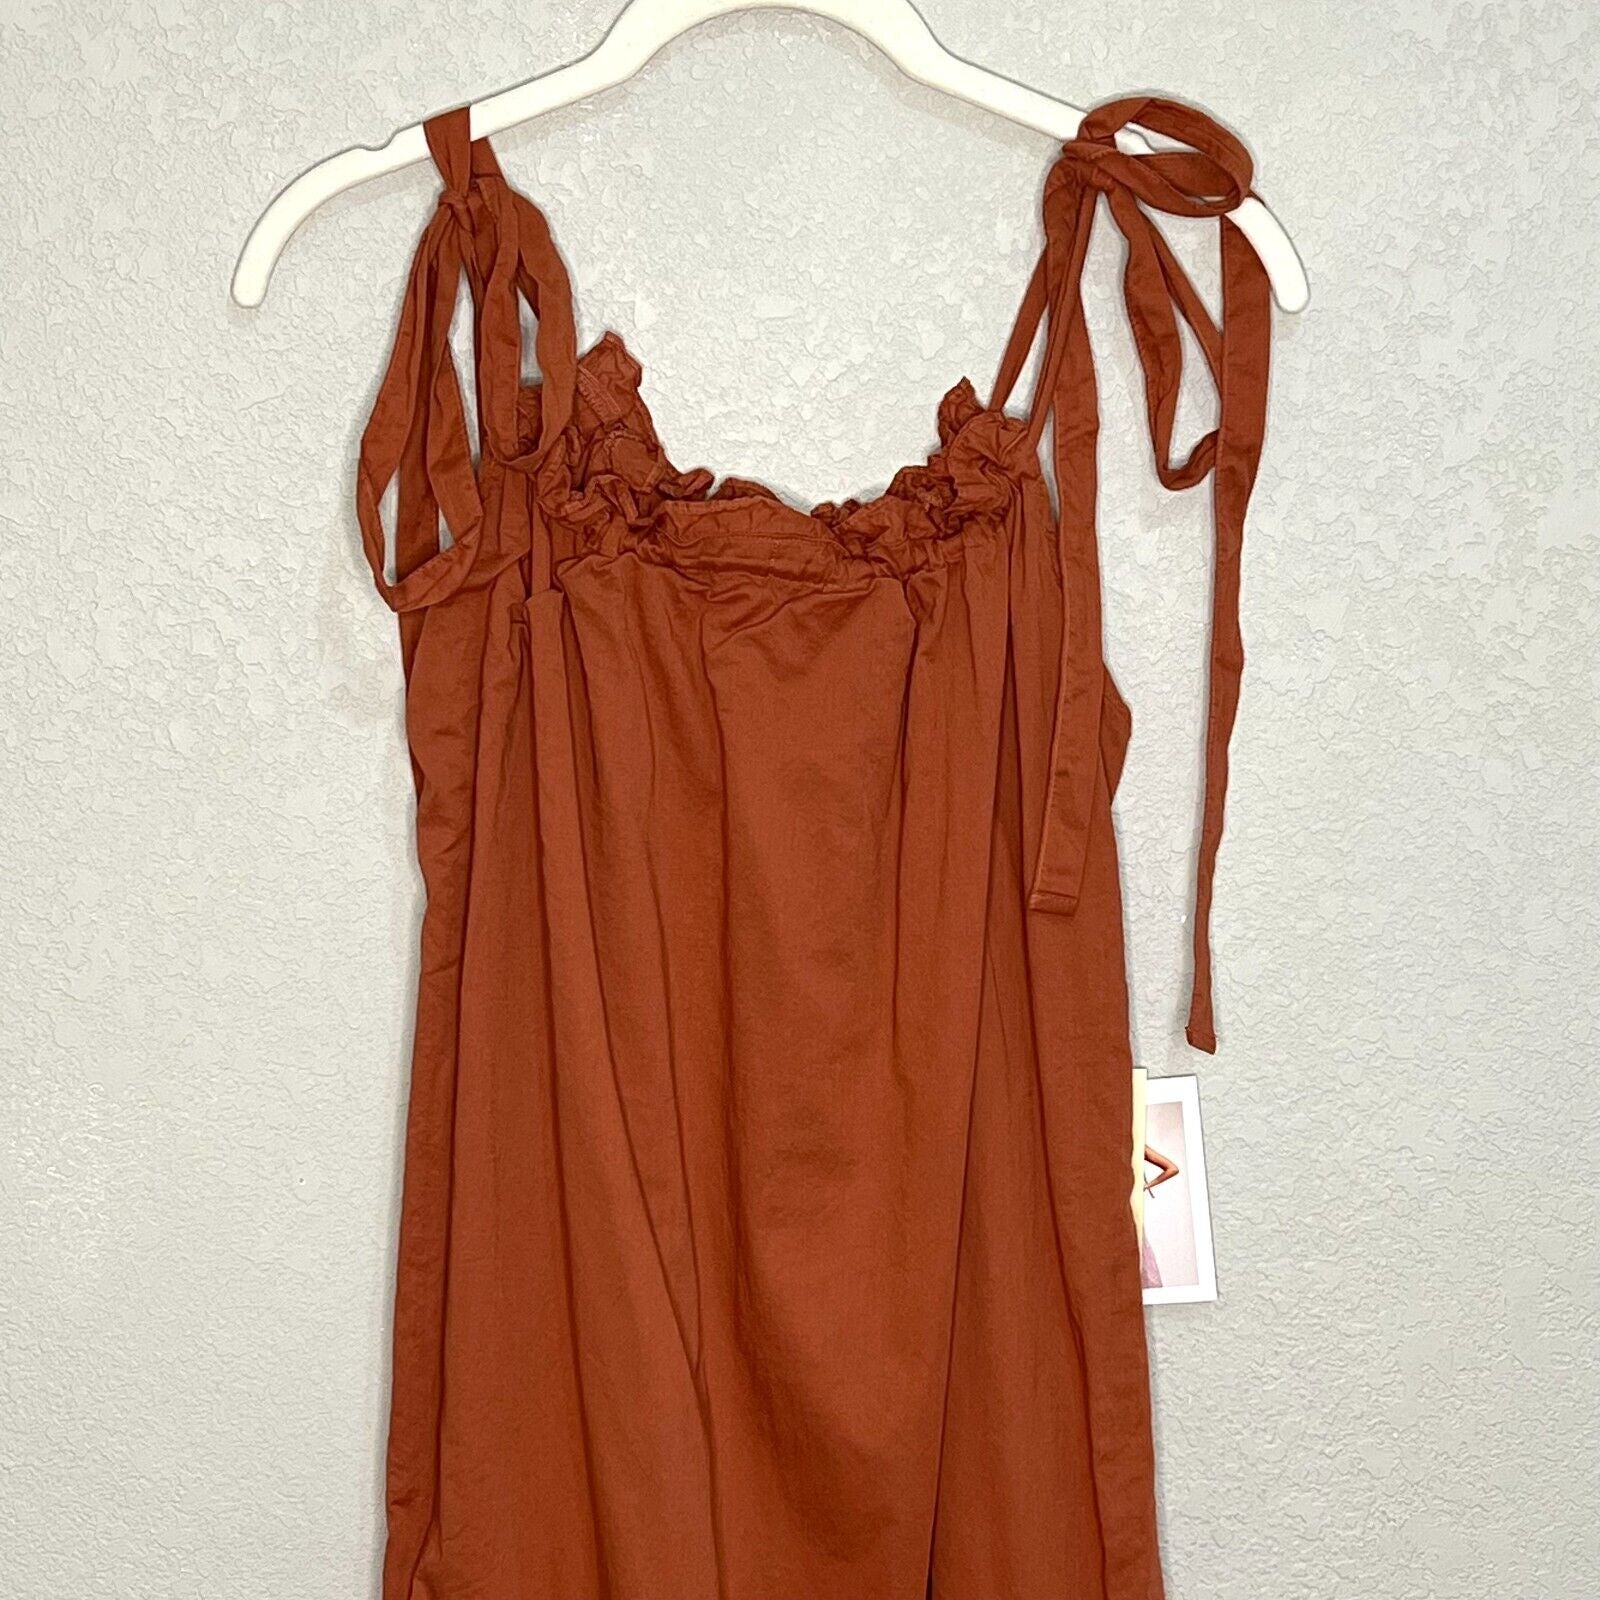 Nation LTD Sequoia Voluminous Dress in Tagin Size Medium NEW $220